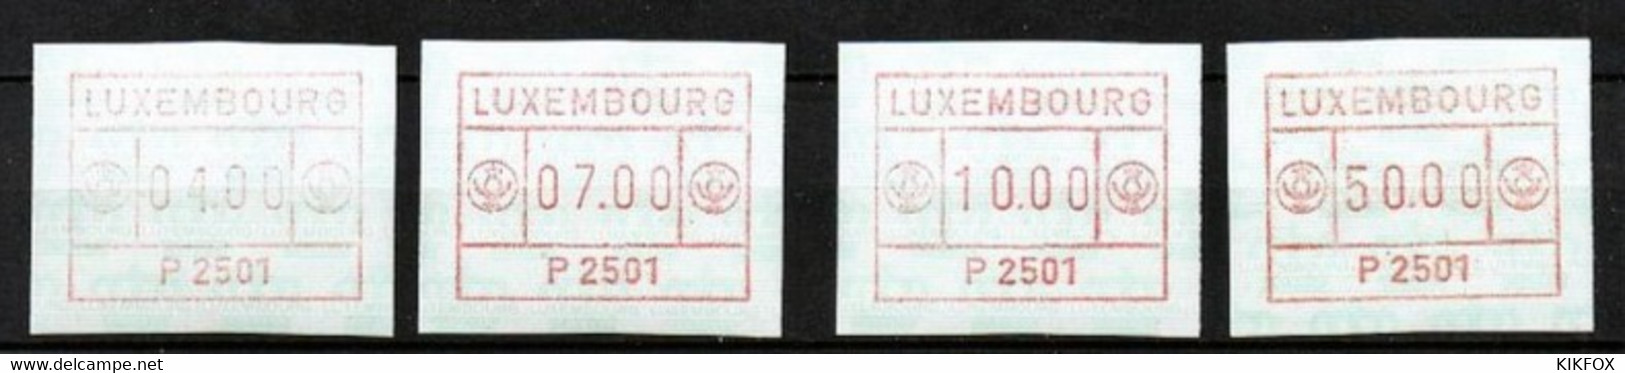 Luxembourg, Luxemburg , 1983, MI 1 ,AUTOMATENMARKEN, DISTRIBUTEUR , 4 WERTE - Frankeervignetten